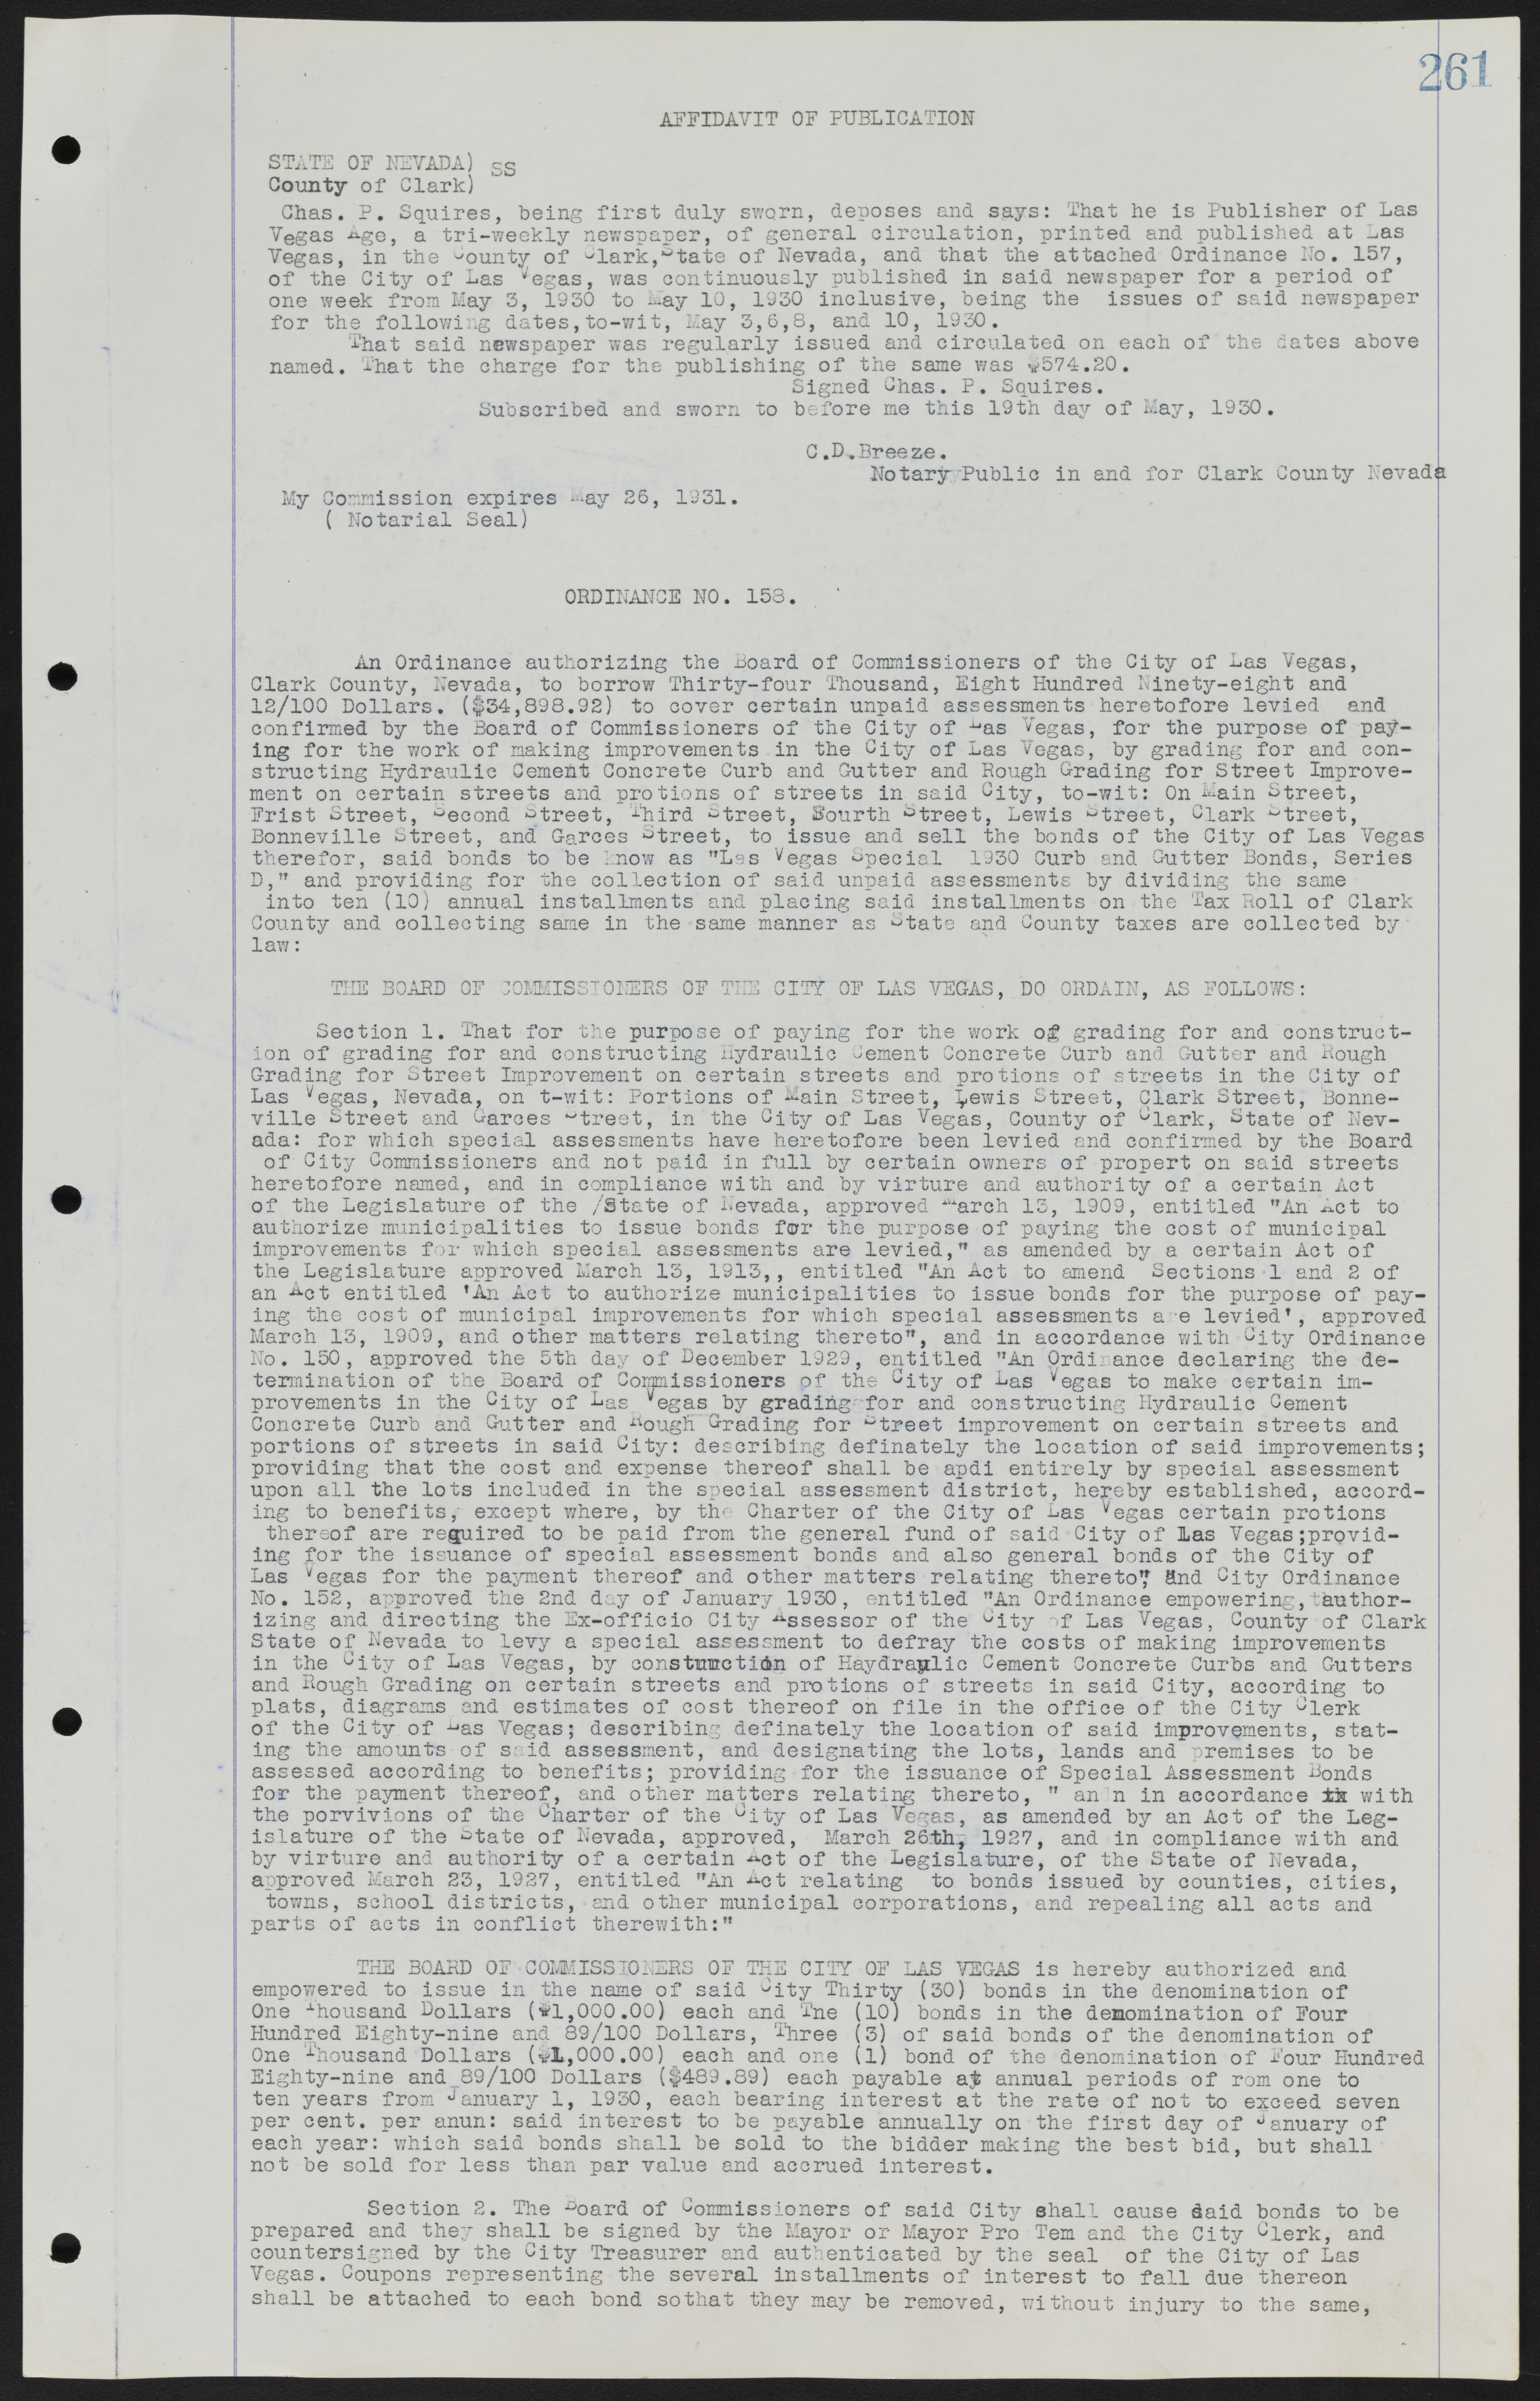 Las Vegas City Ordinances, July 18, 1911 to March 31, 1933, lvc000013-265